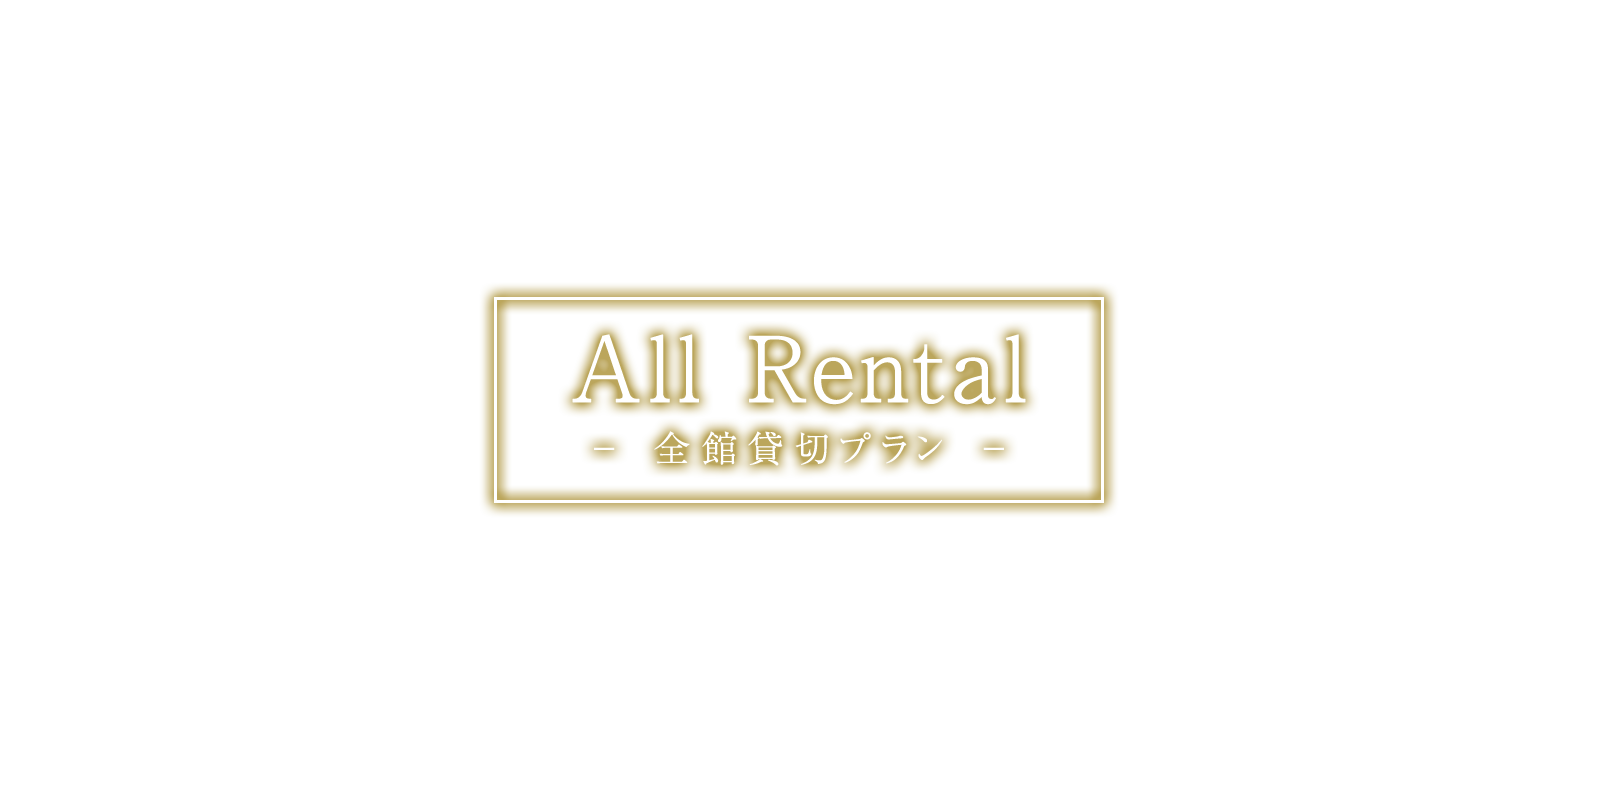 All Rental / 全館貸切プラン